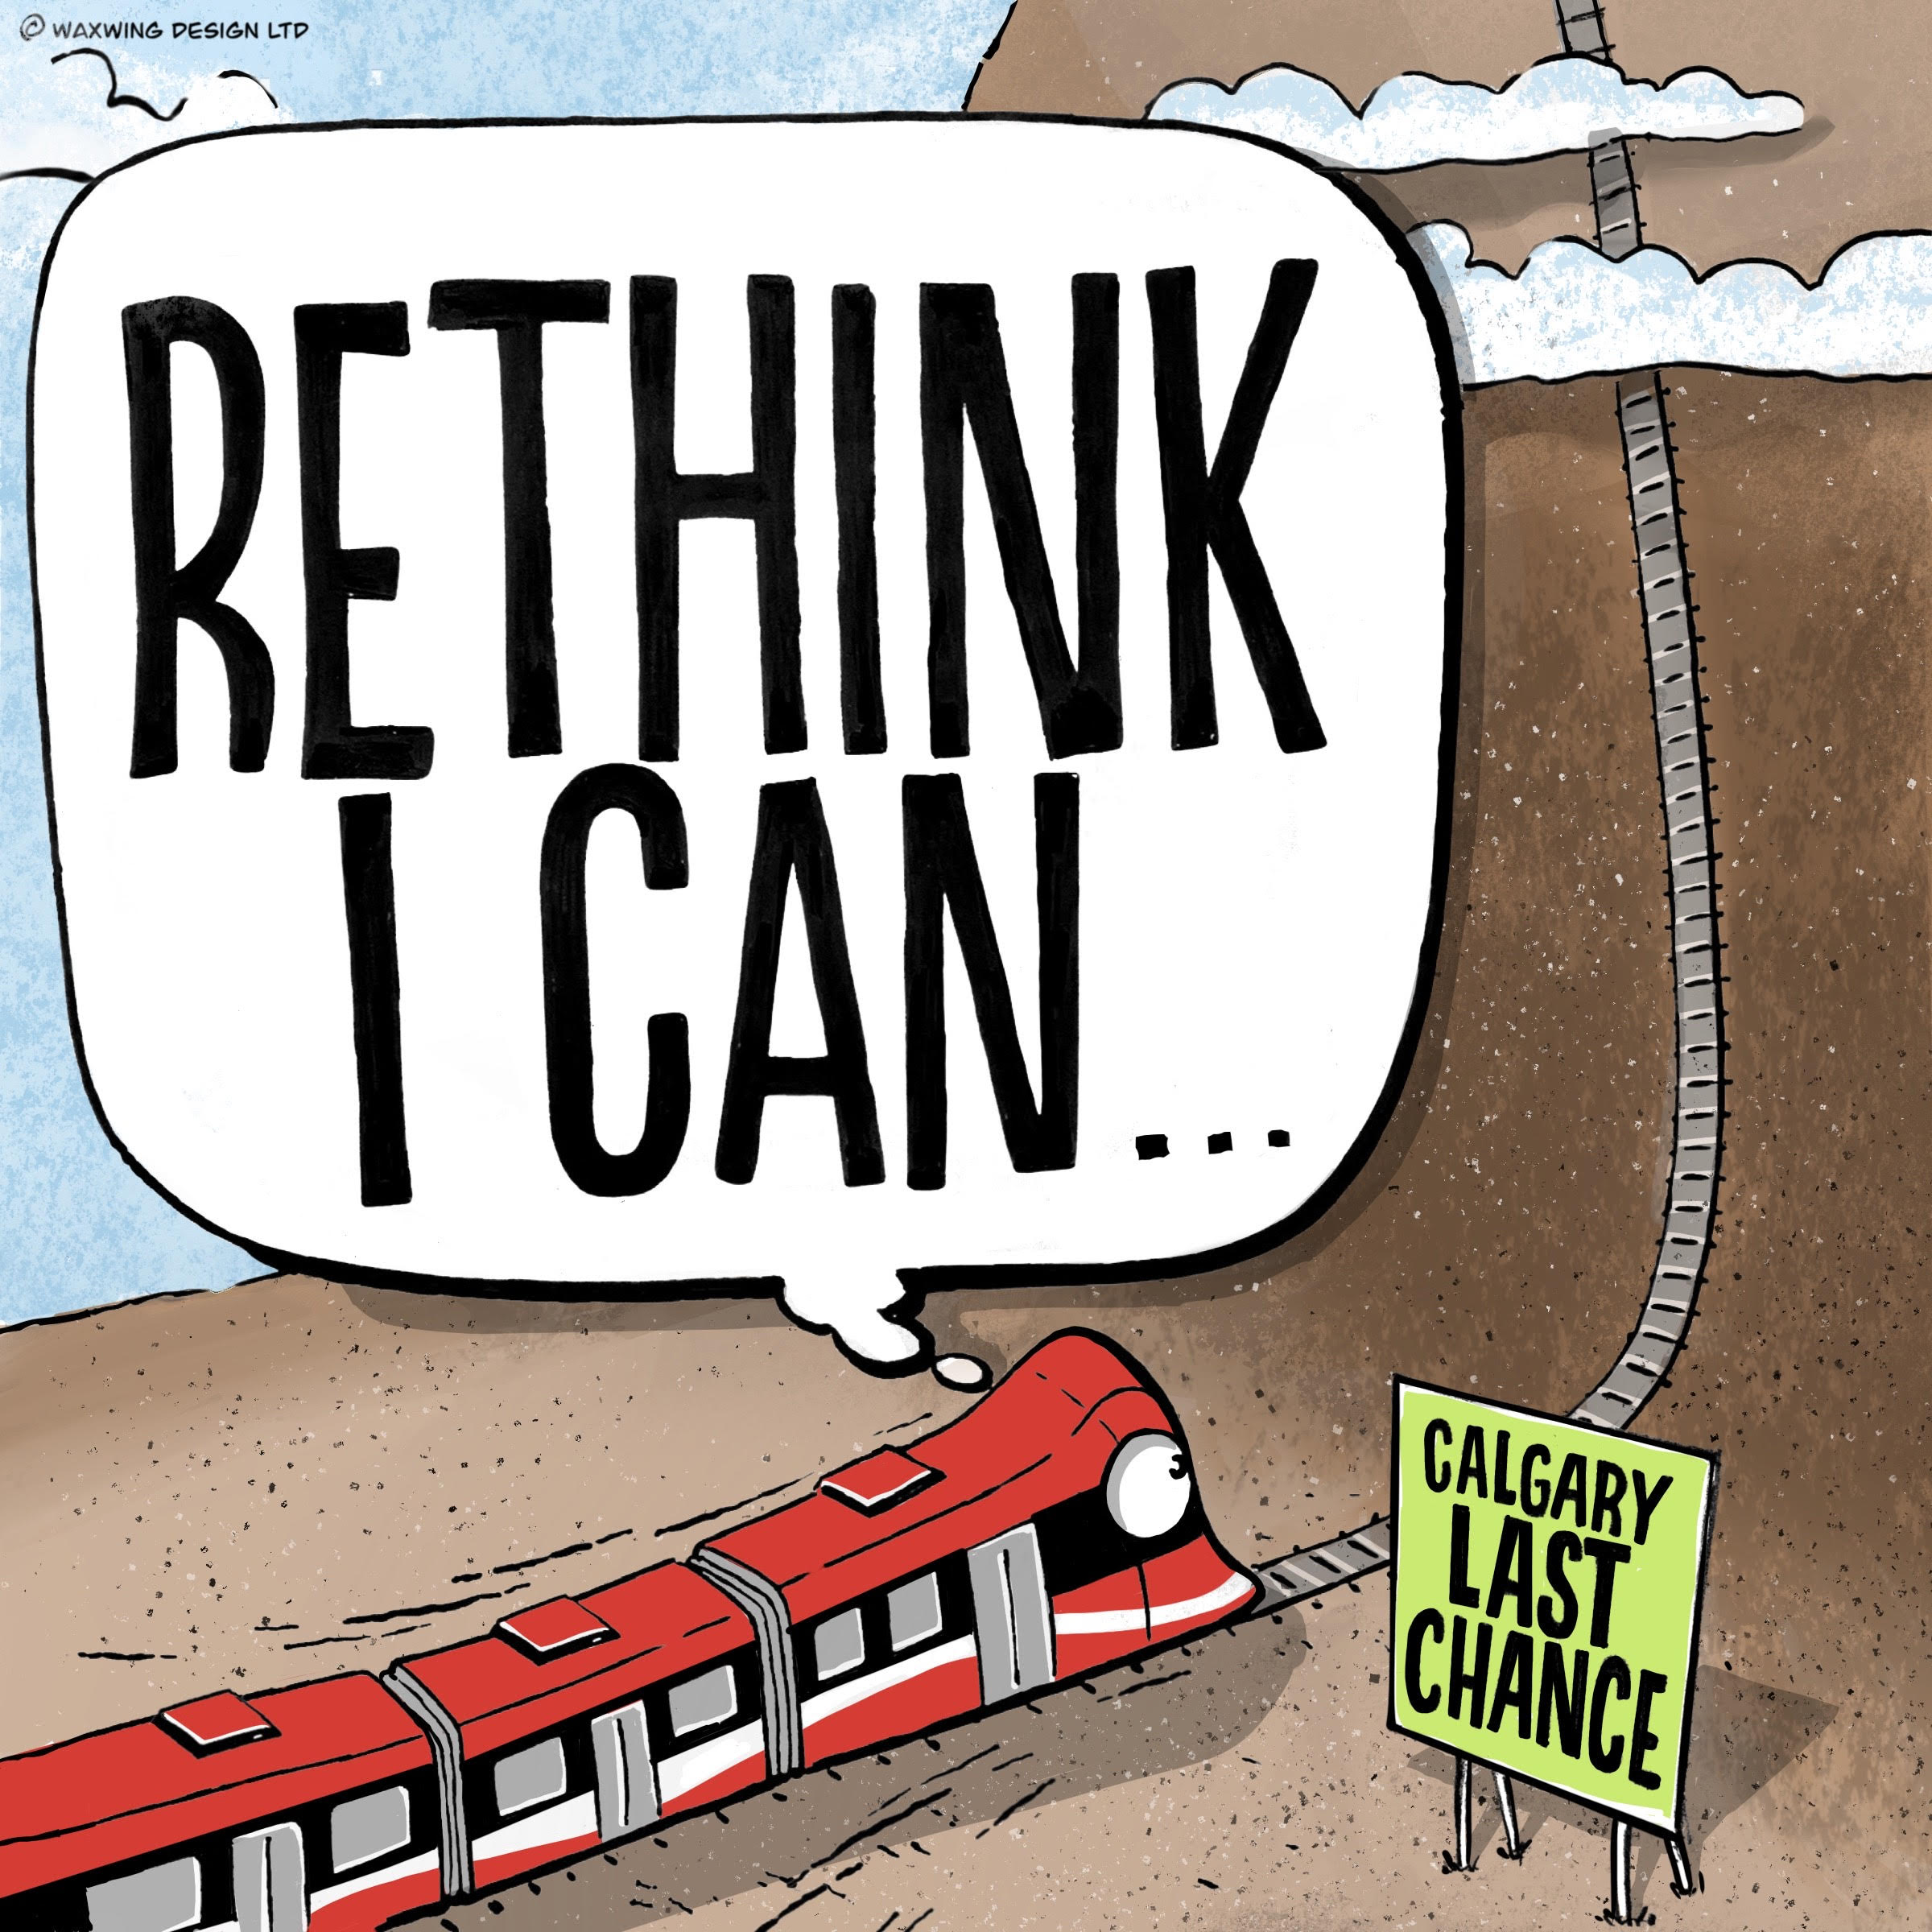 Editorial Cartoon: Rethink I can—Last chance Calgary!